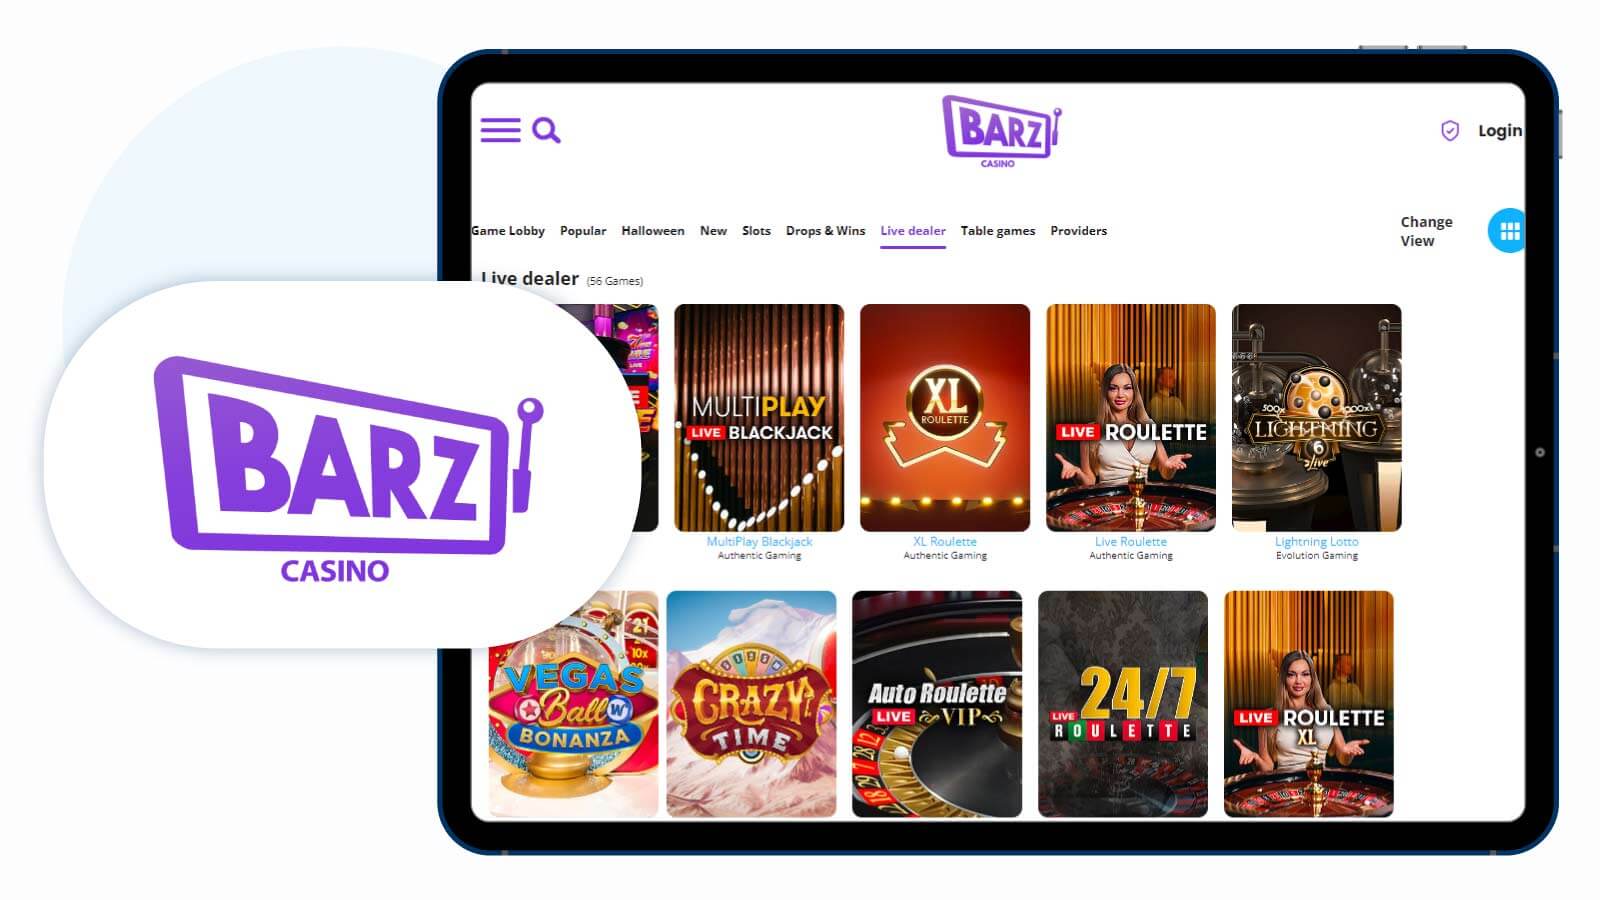 Top Roulette Welcome Bonus - Barz Casino